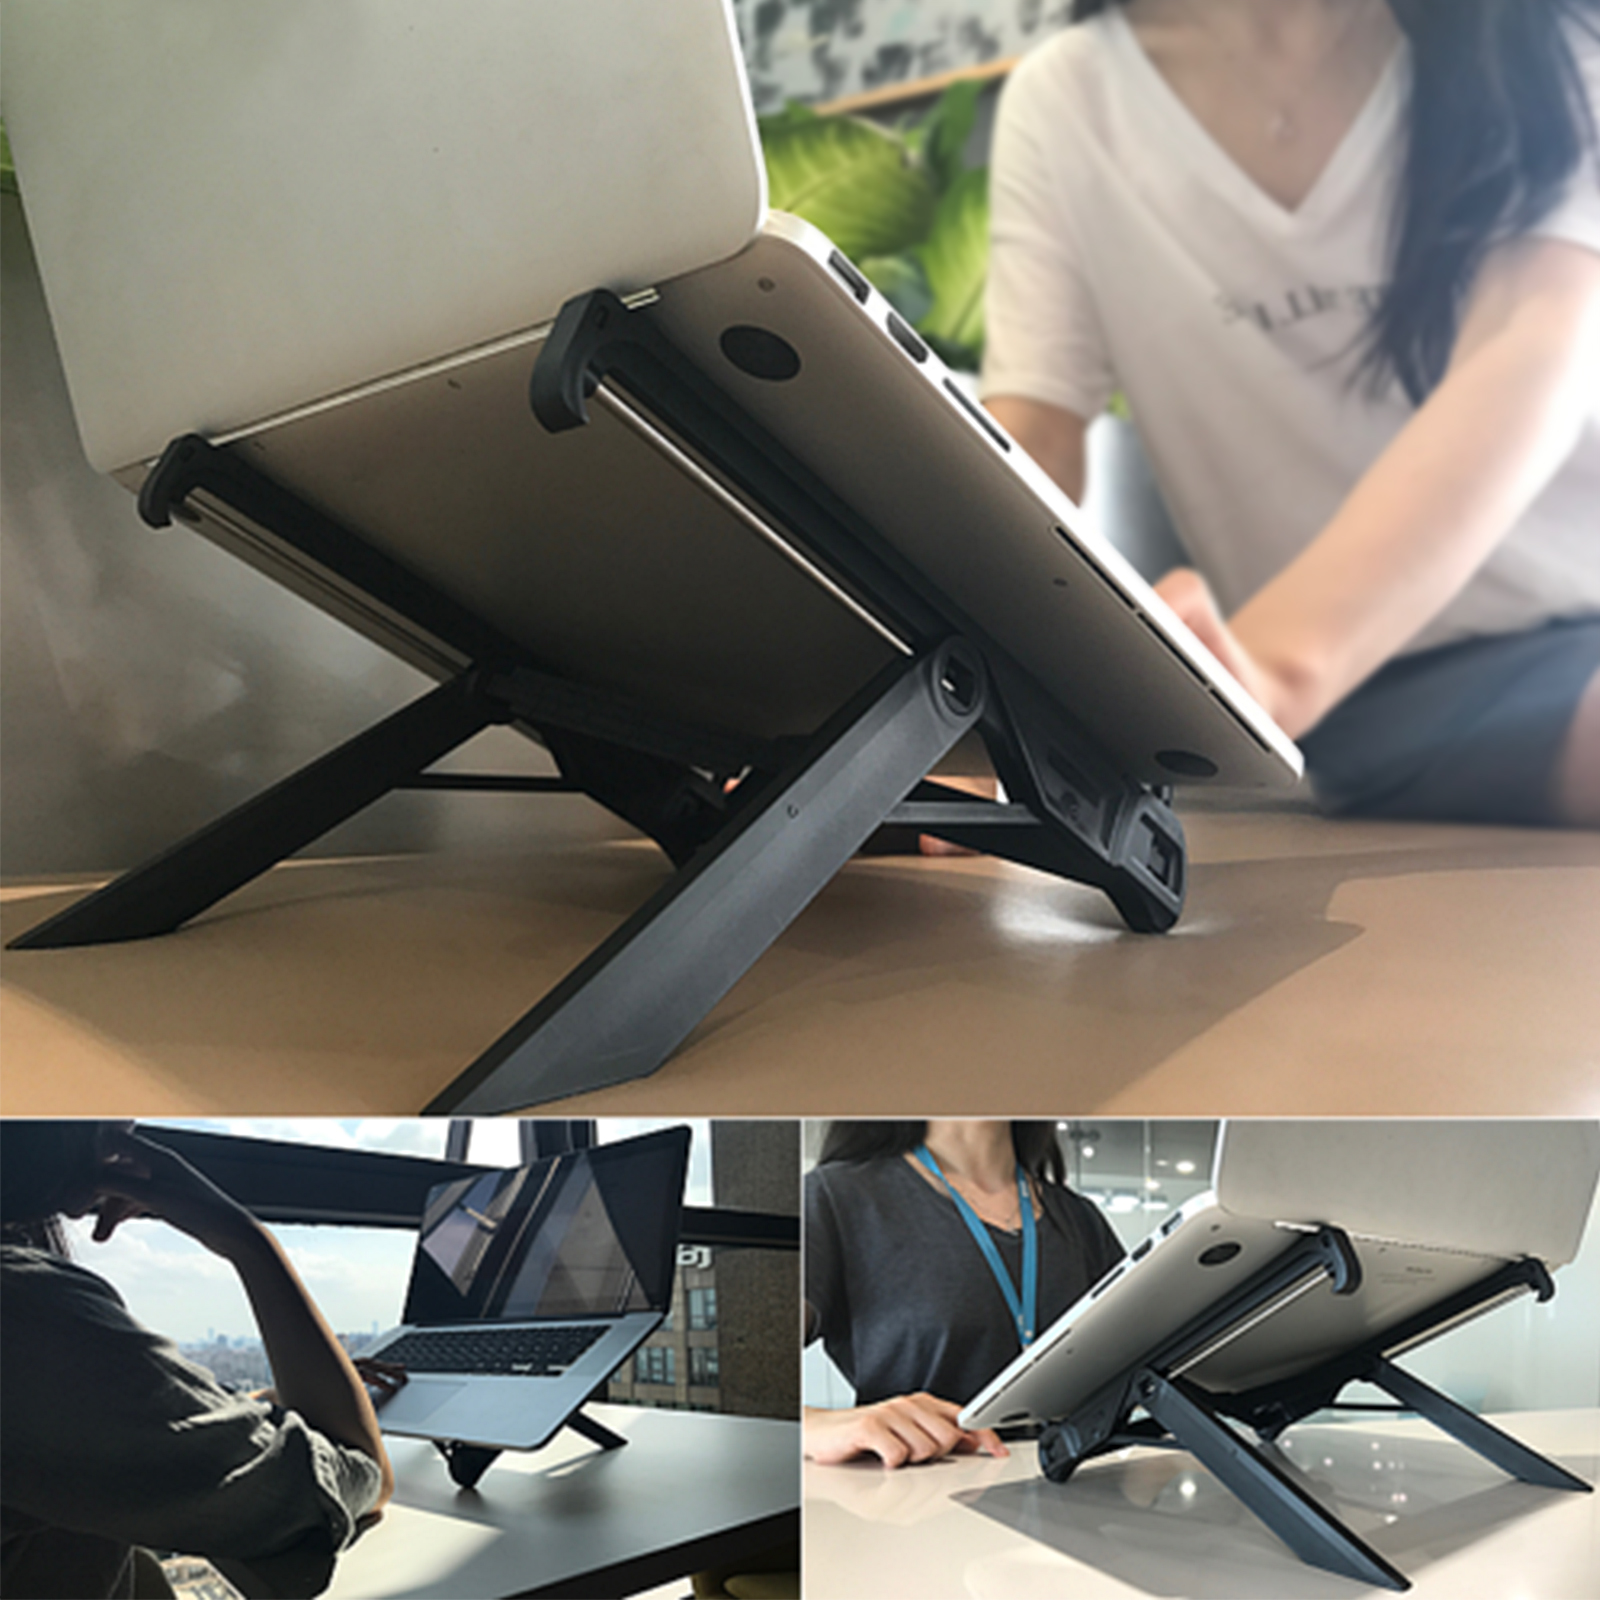 EEEkit Universal Laptop Stand with Height Adjustment, Ventilated Desktop Holder Supports iPad, Tablet, MacBook, Black - image 3 of 9